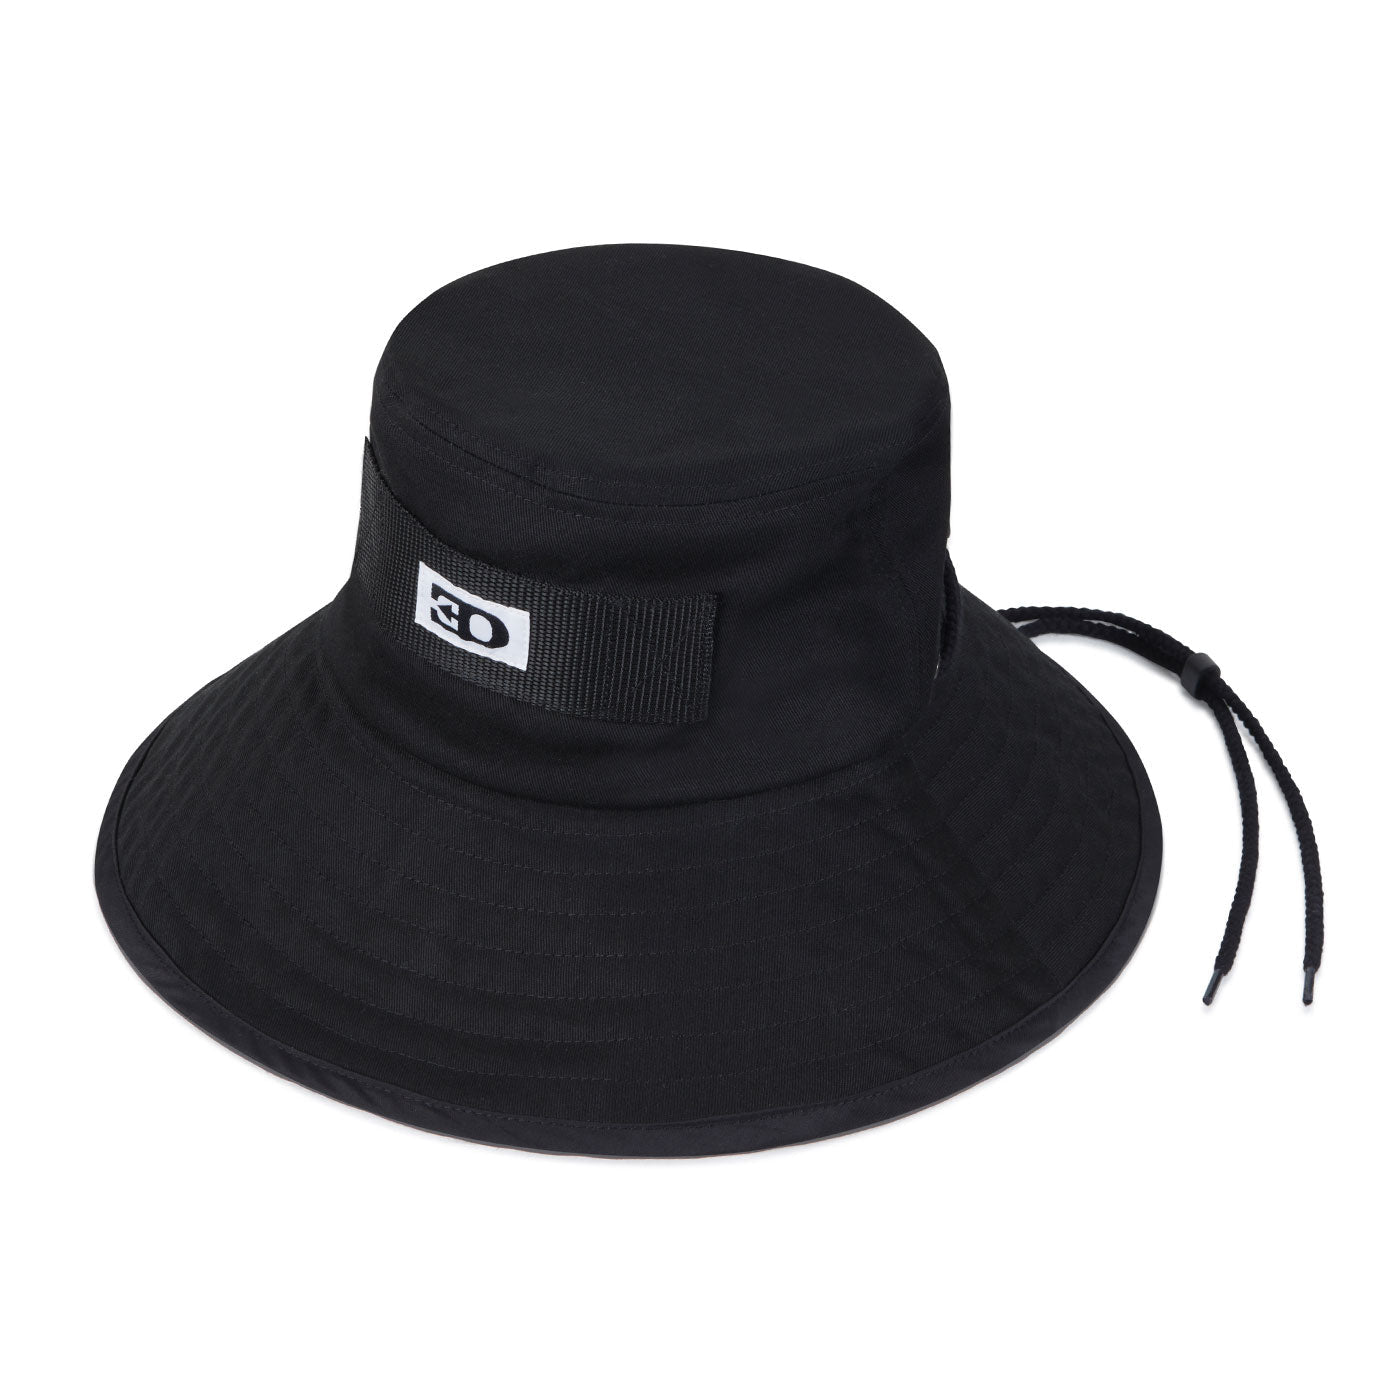 THE WESTERN  BUCKET HAT IN BLACK COTTON